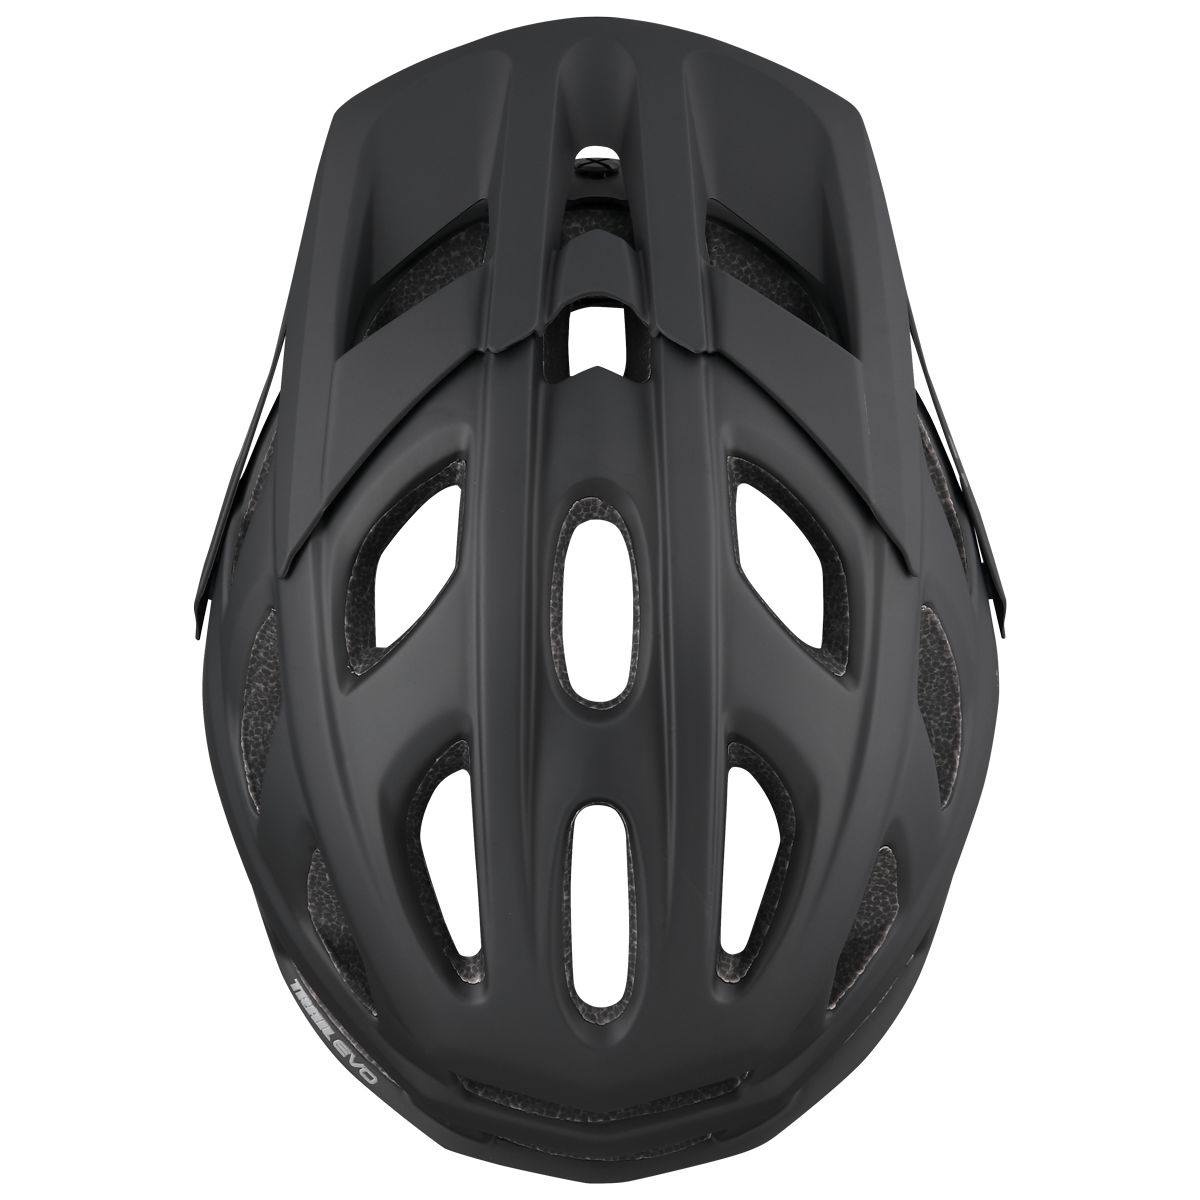 iXS IXS Trail Evo Helmet - Helmets - Bicycle Warehouse